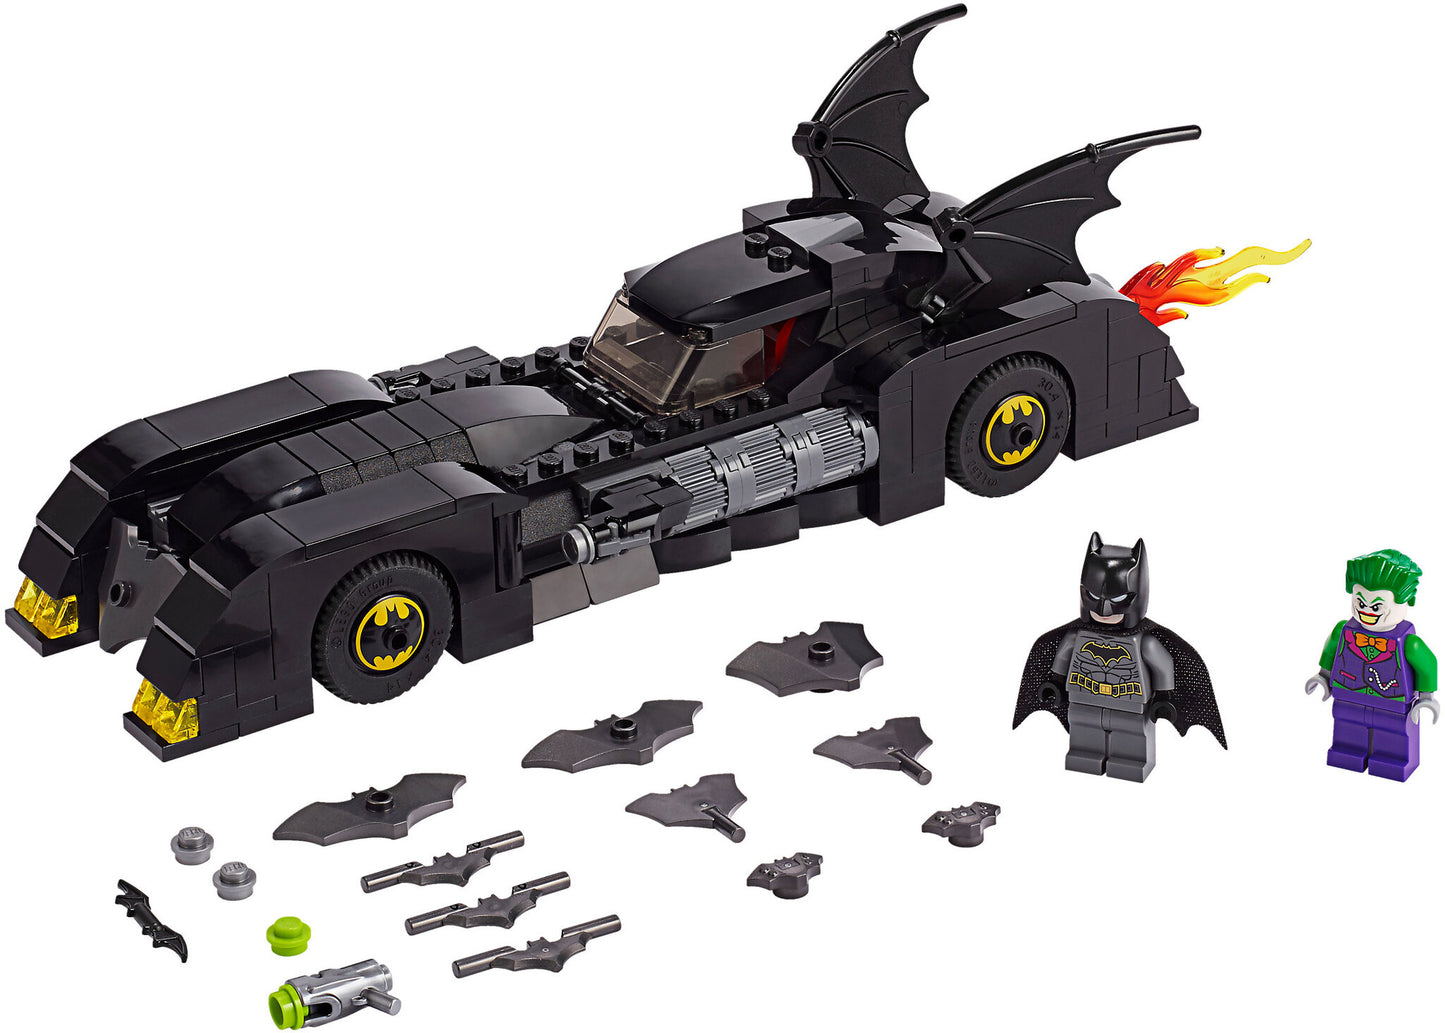 76119 LEGO DC Super Heroes - Batmobile™: Inseguimento di Joker™